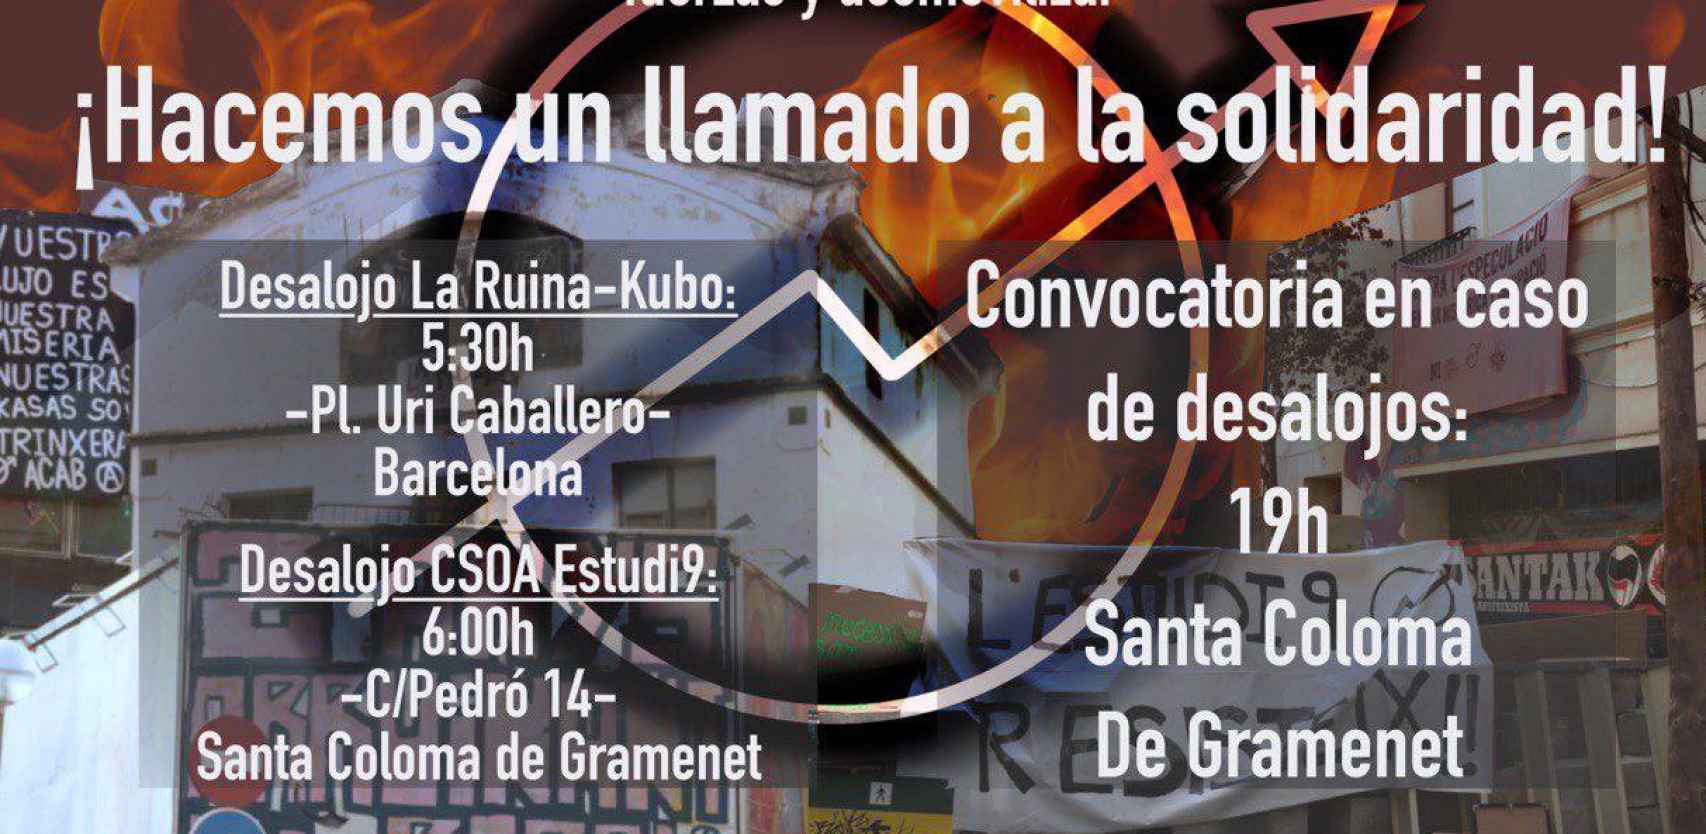 Convocatoria de manifestación en Santa Coloma